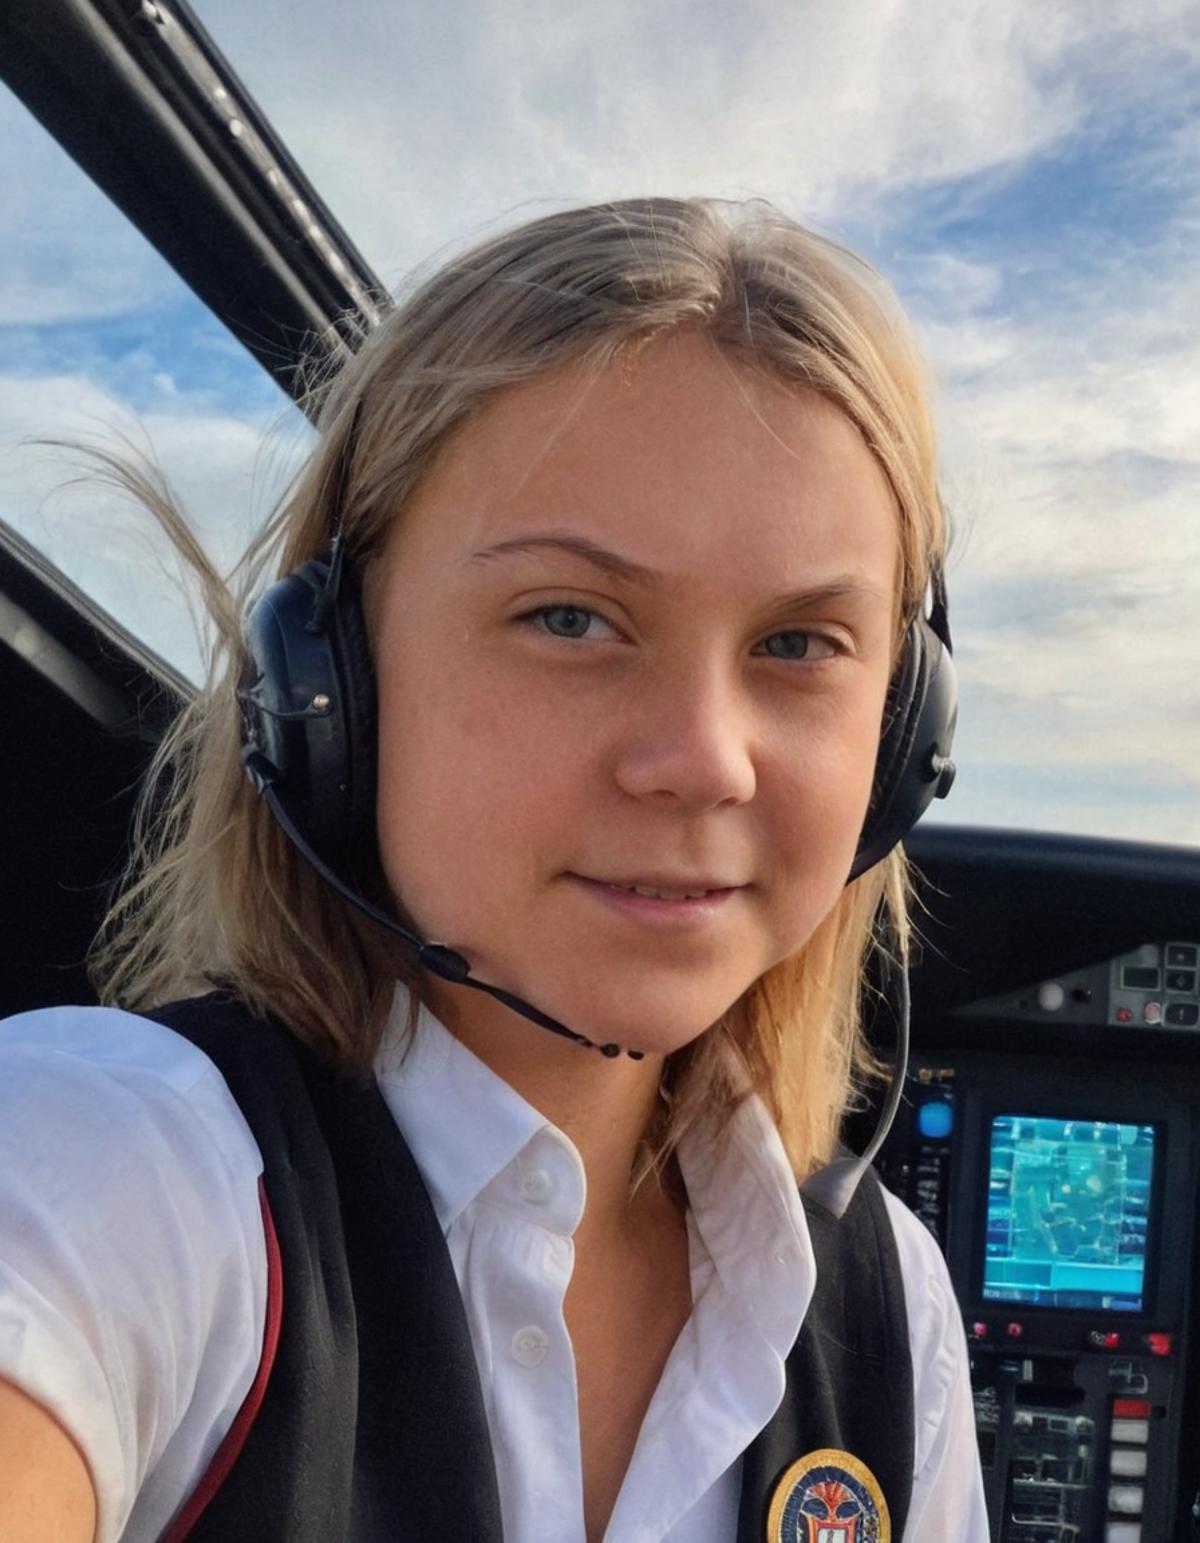 Greta Thunberg image by OC__